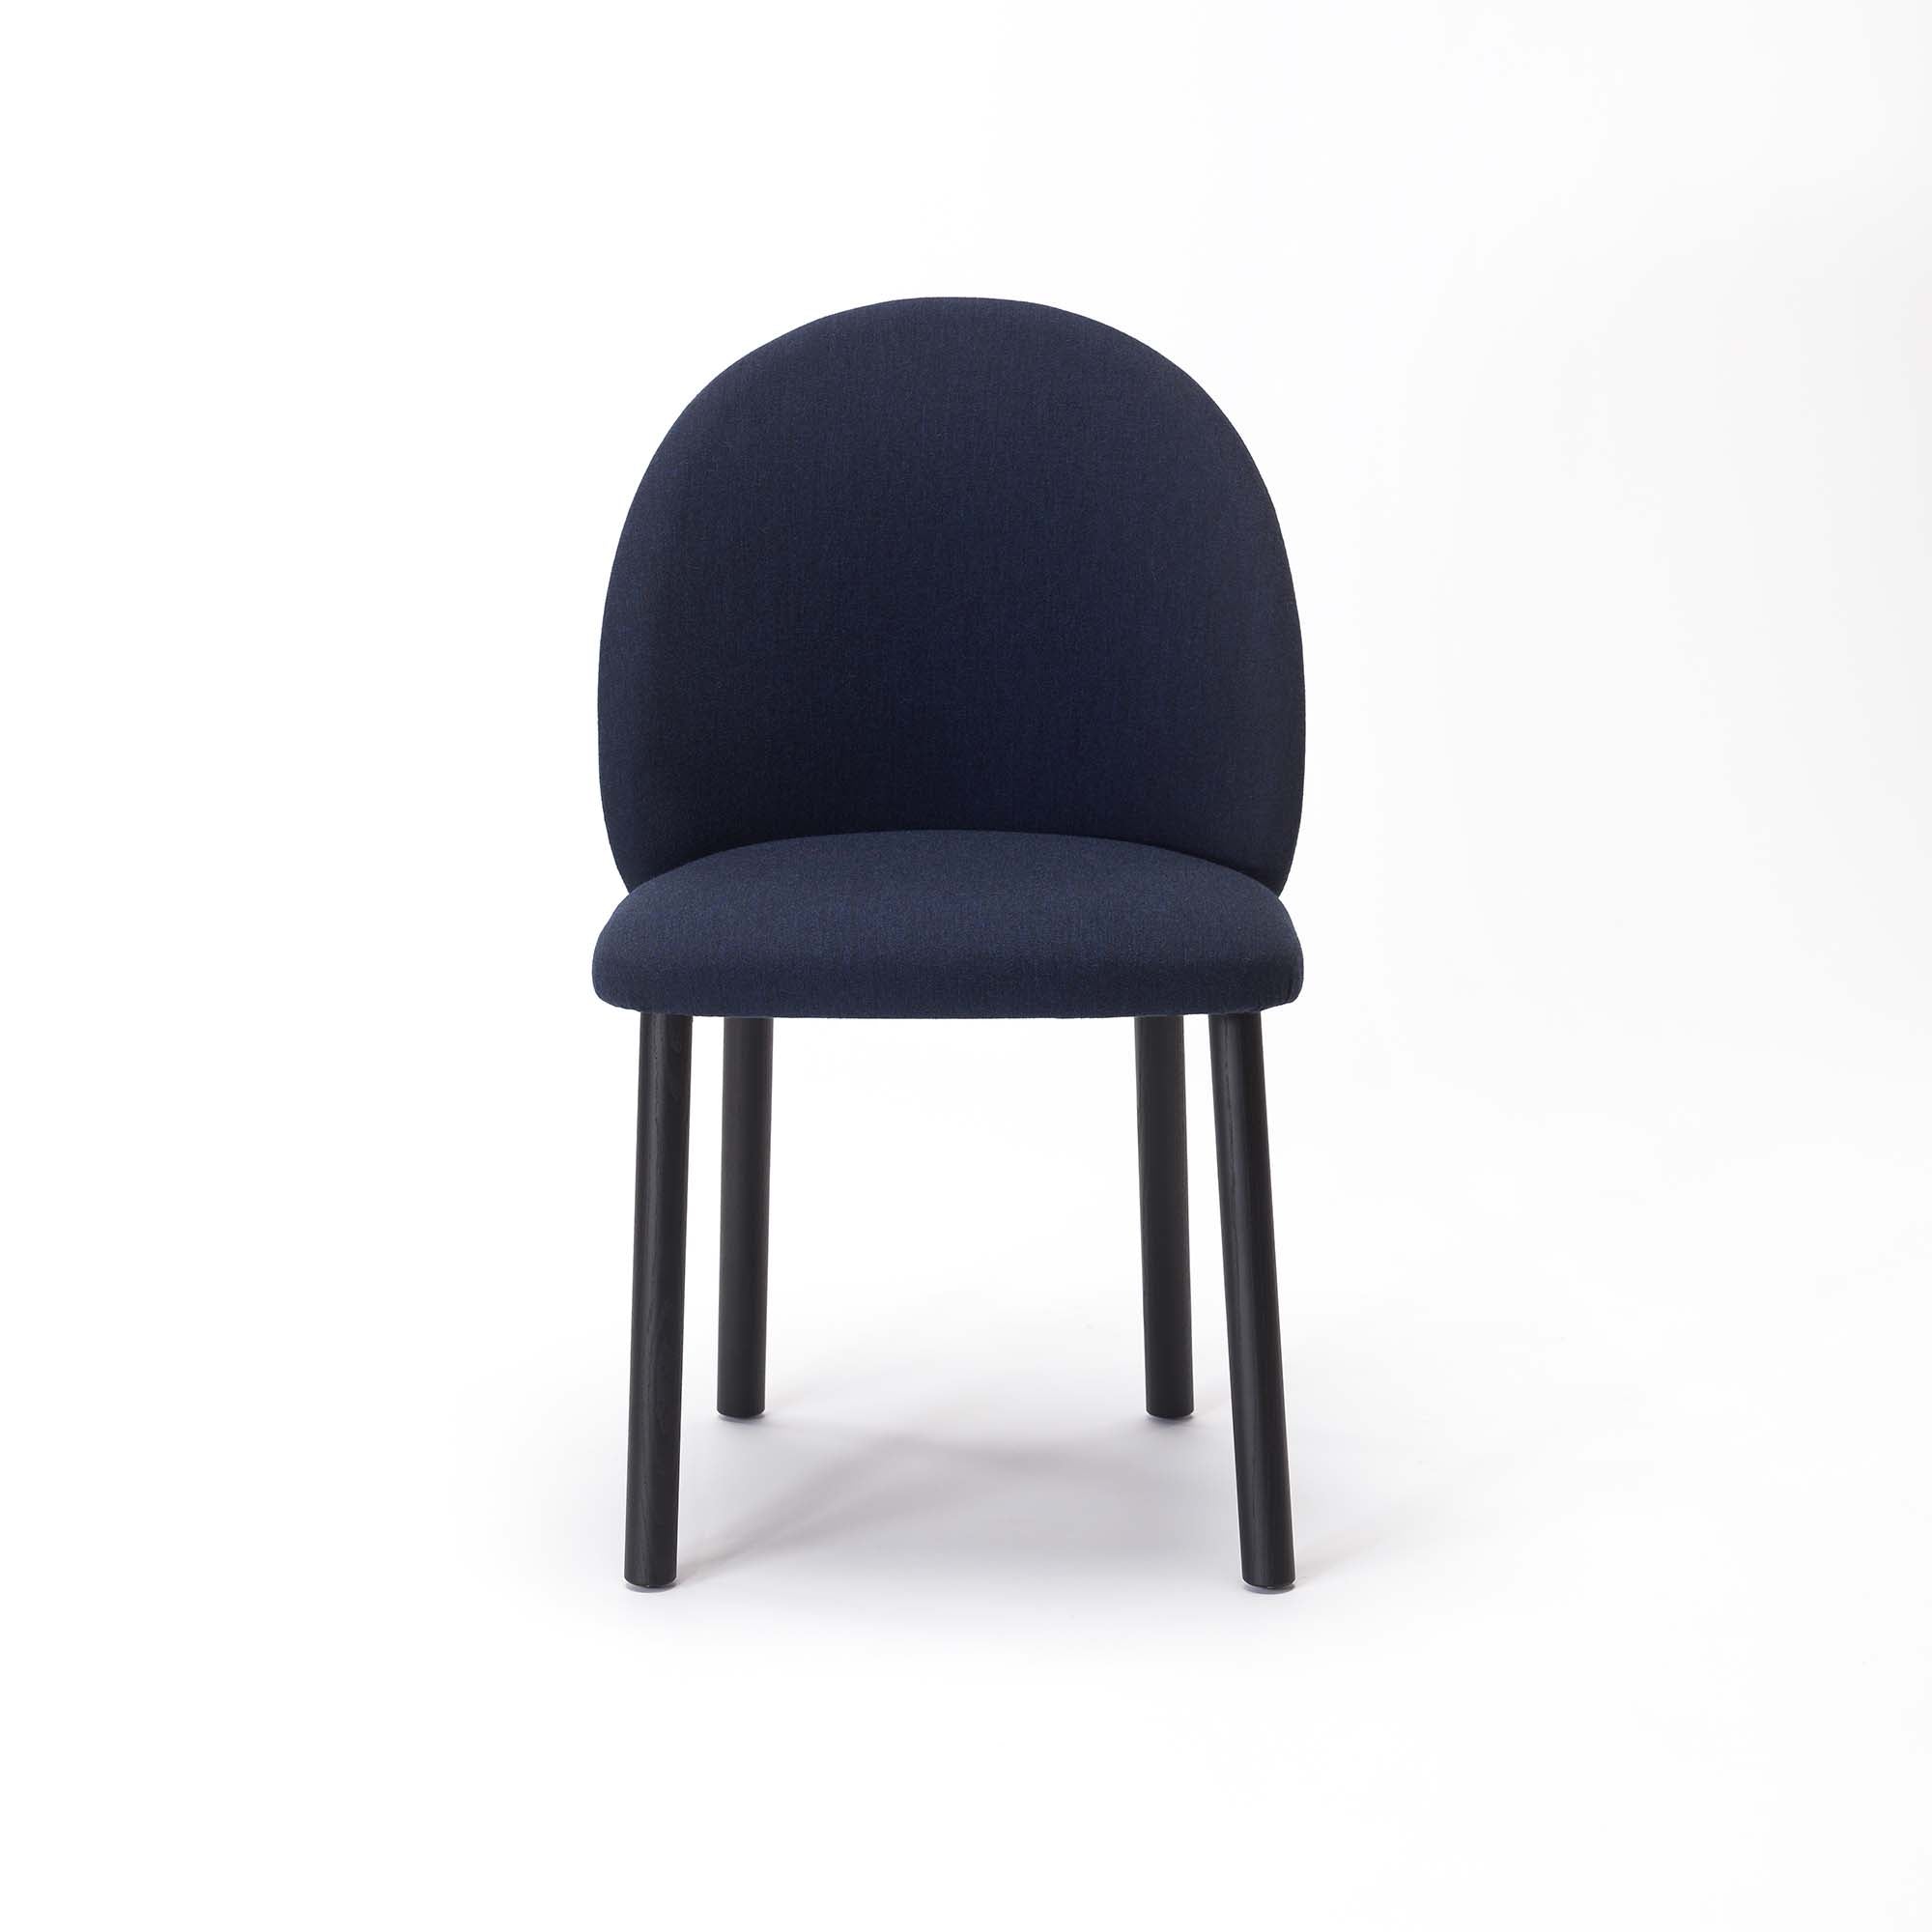 NASU Side Chair Black-Navy Blue front view